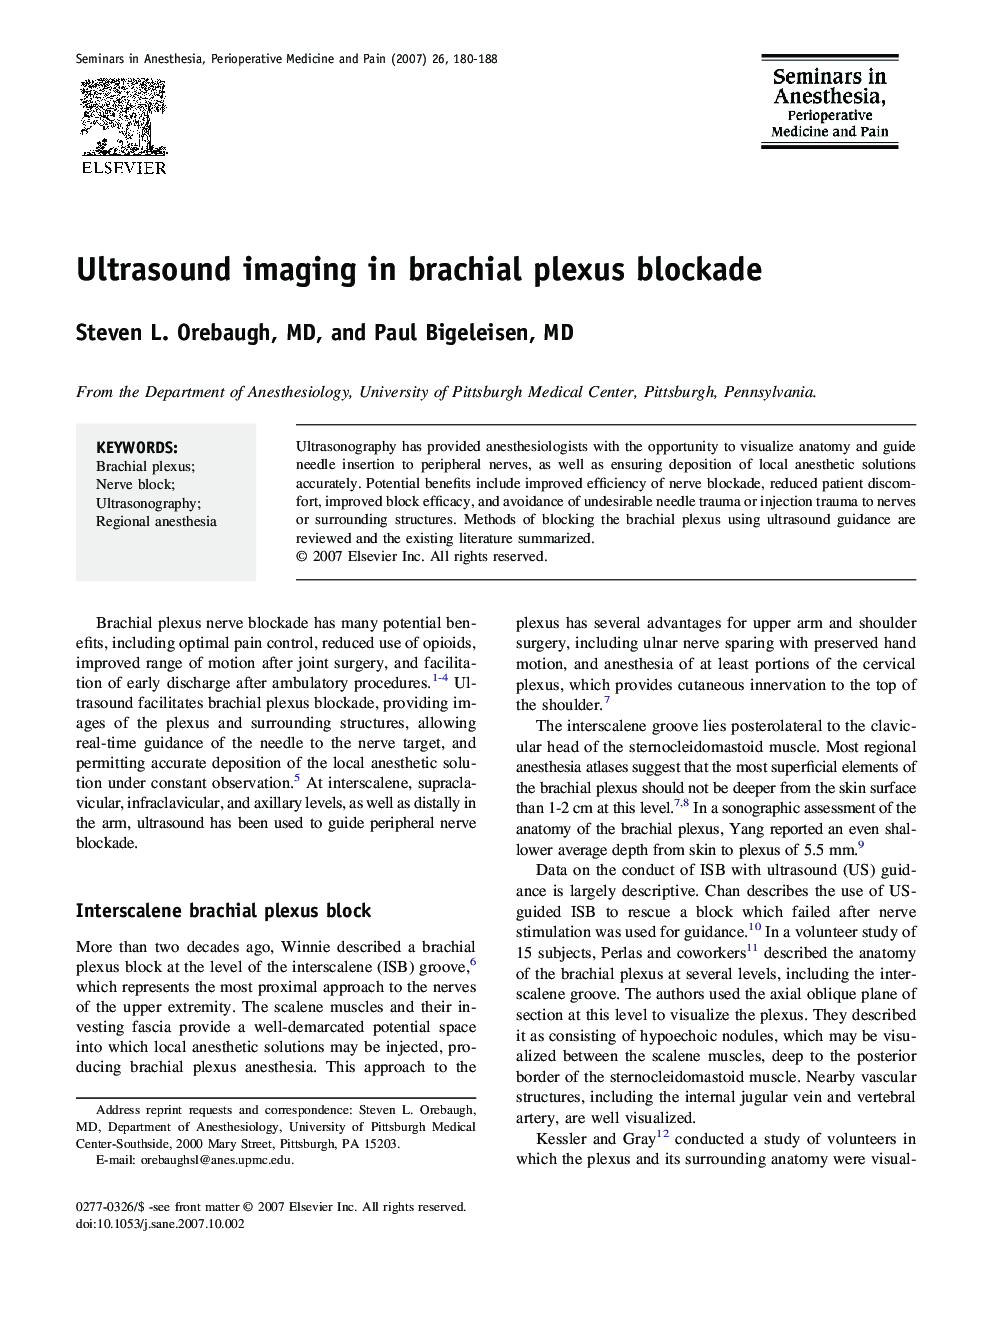 Ultrasound imaging in brachial plexus blockade